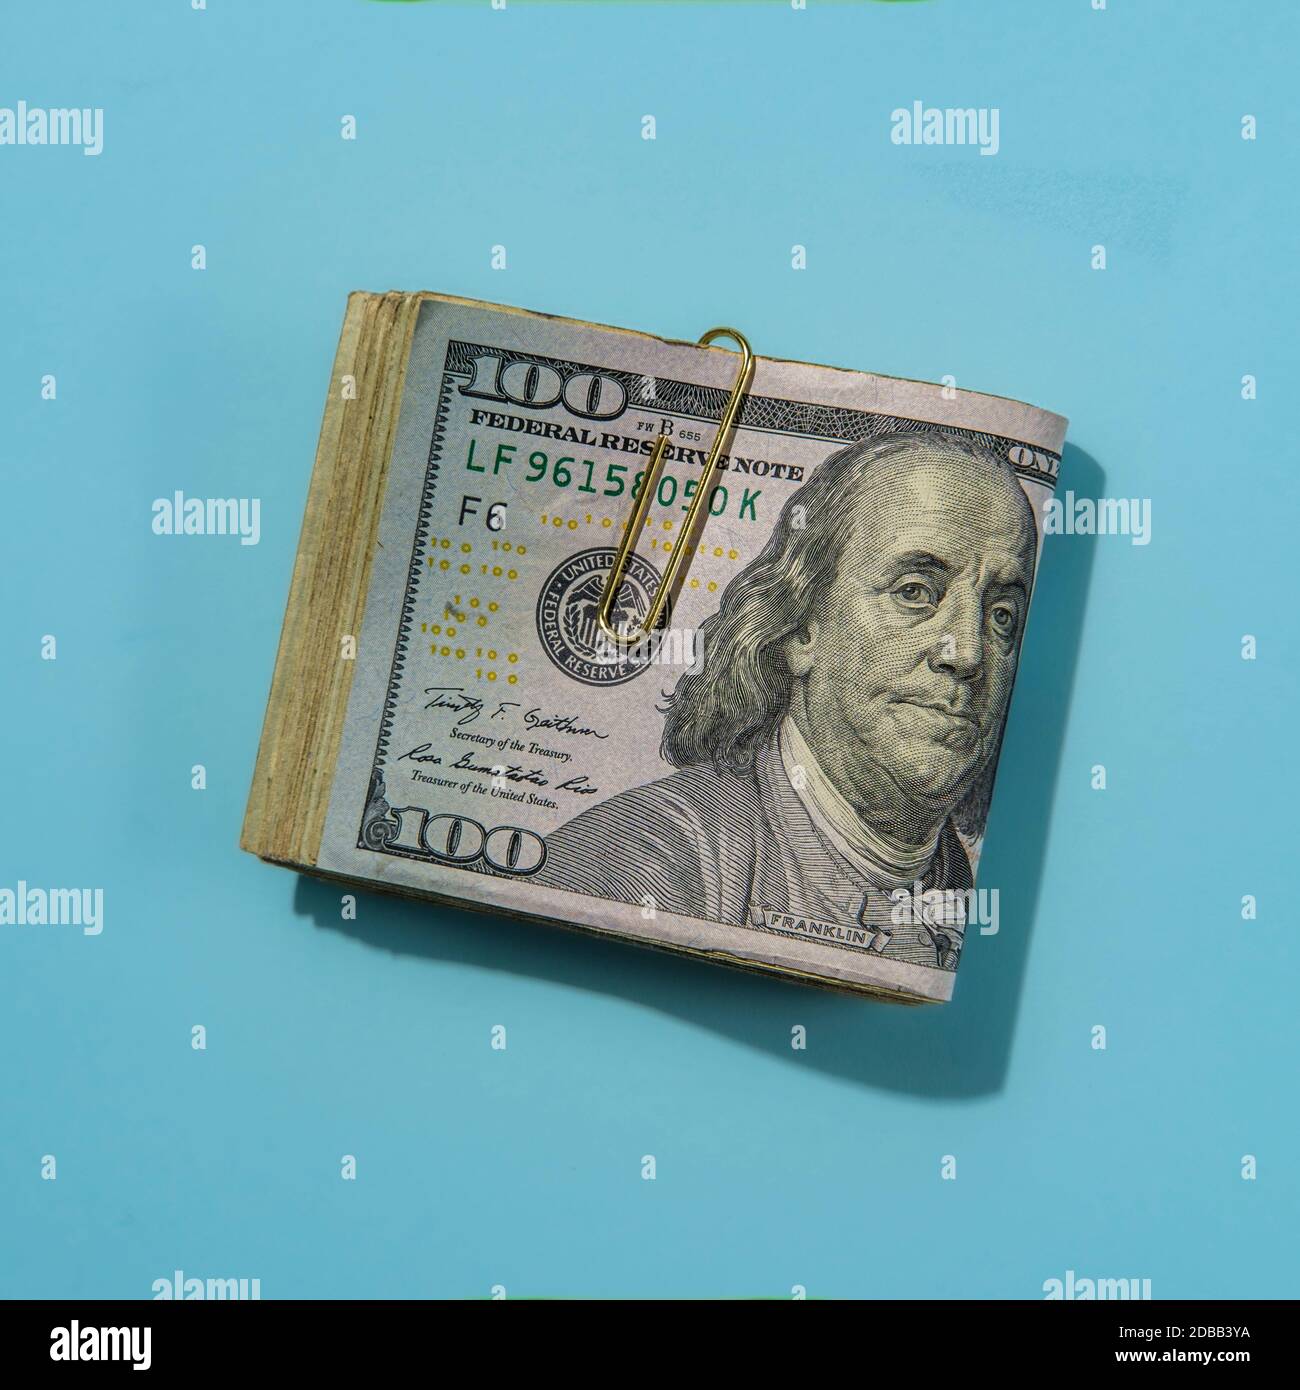 Wad of US dollar bills Stock Photo